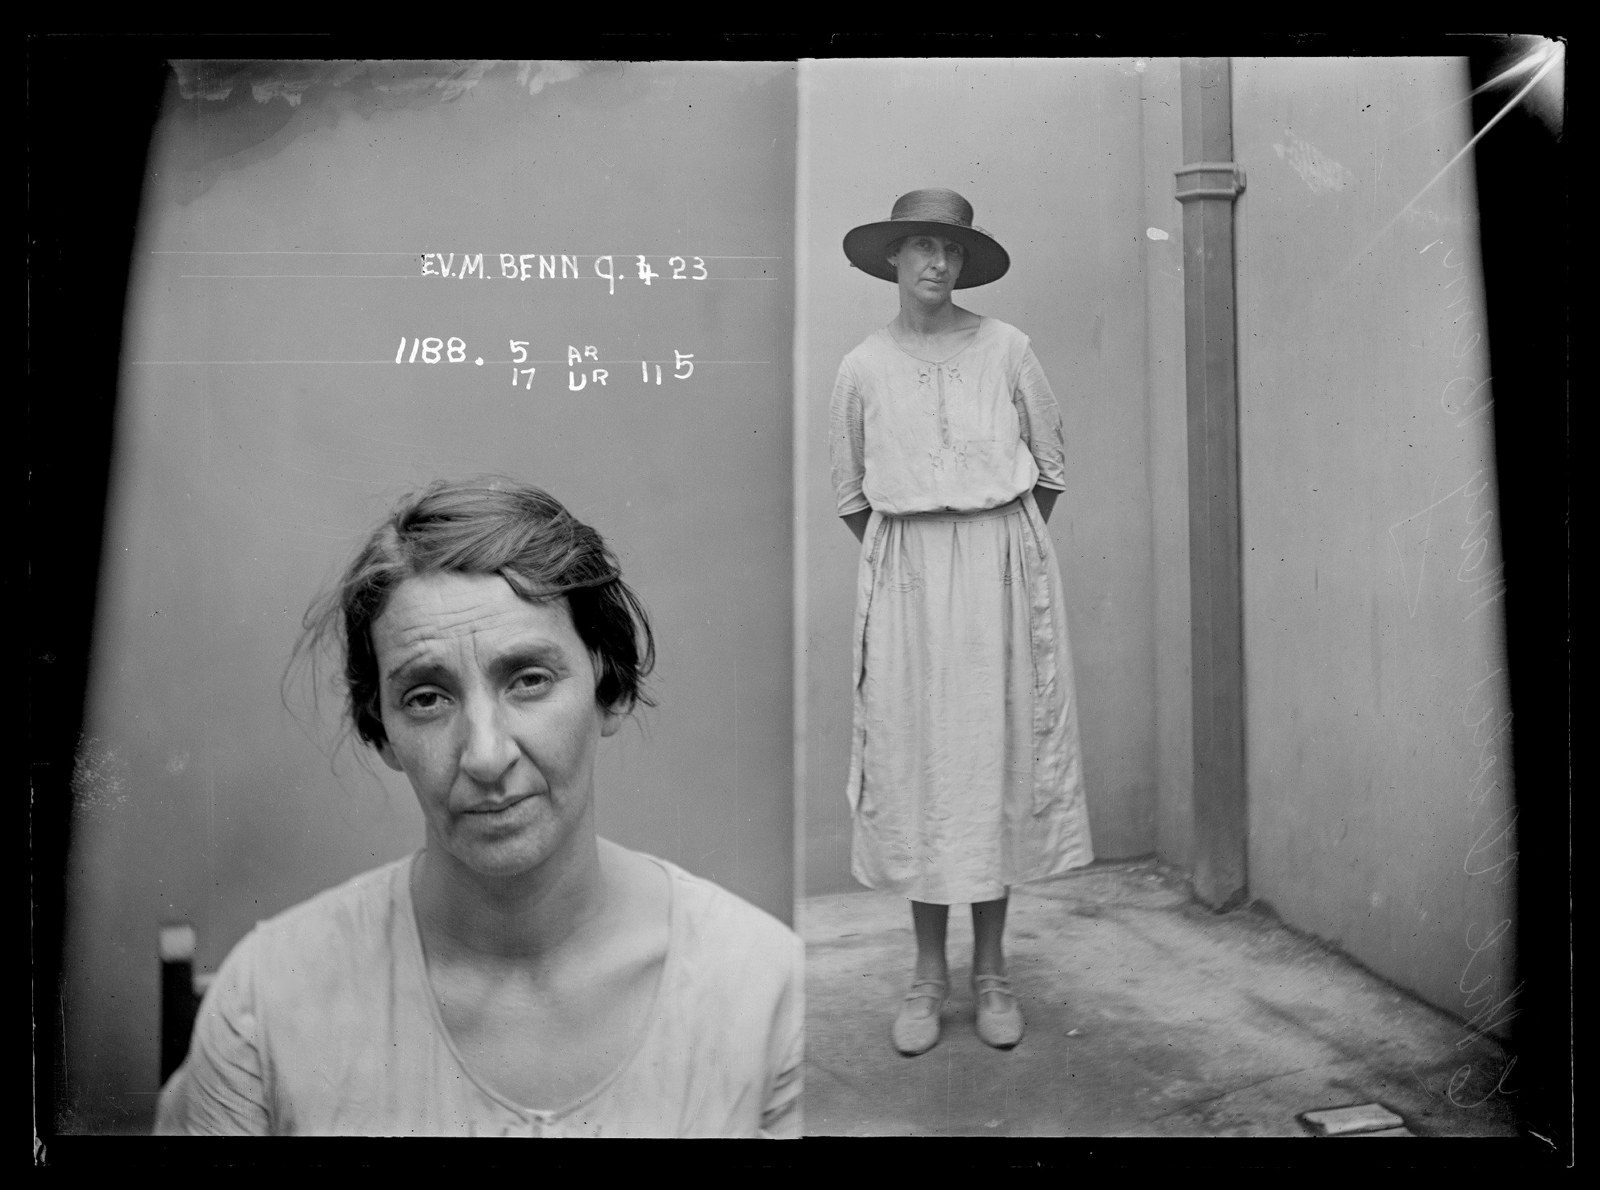 Ethel Violet May Benn, Special photograph number 1188, 9 April 1923, probably Central Police Court, Sydney